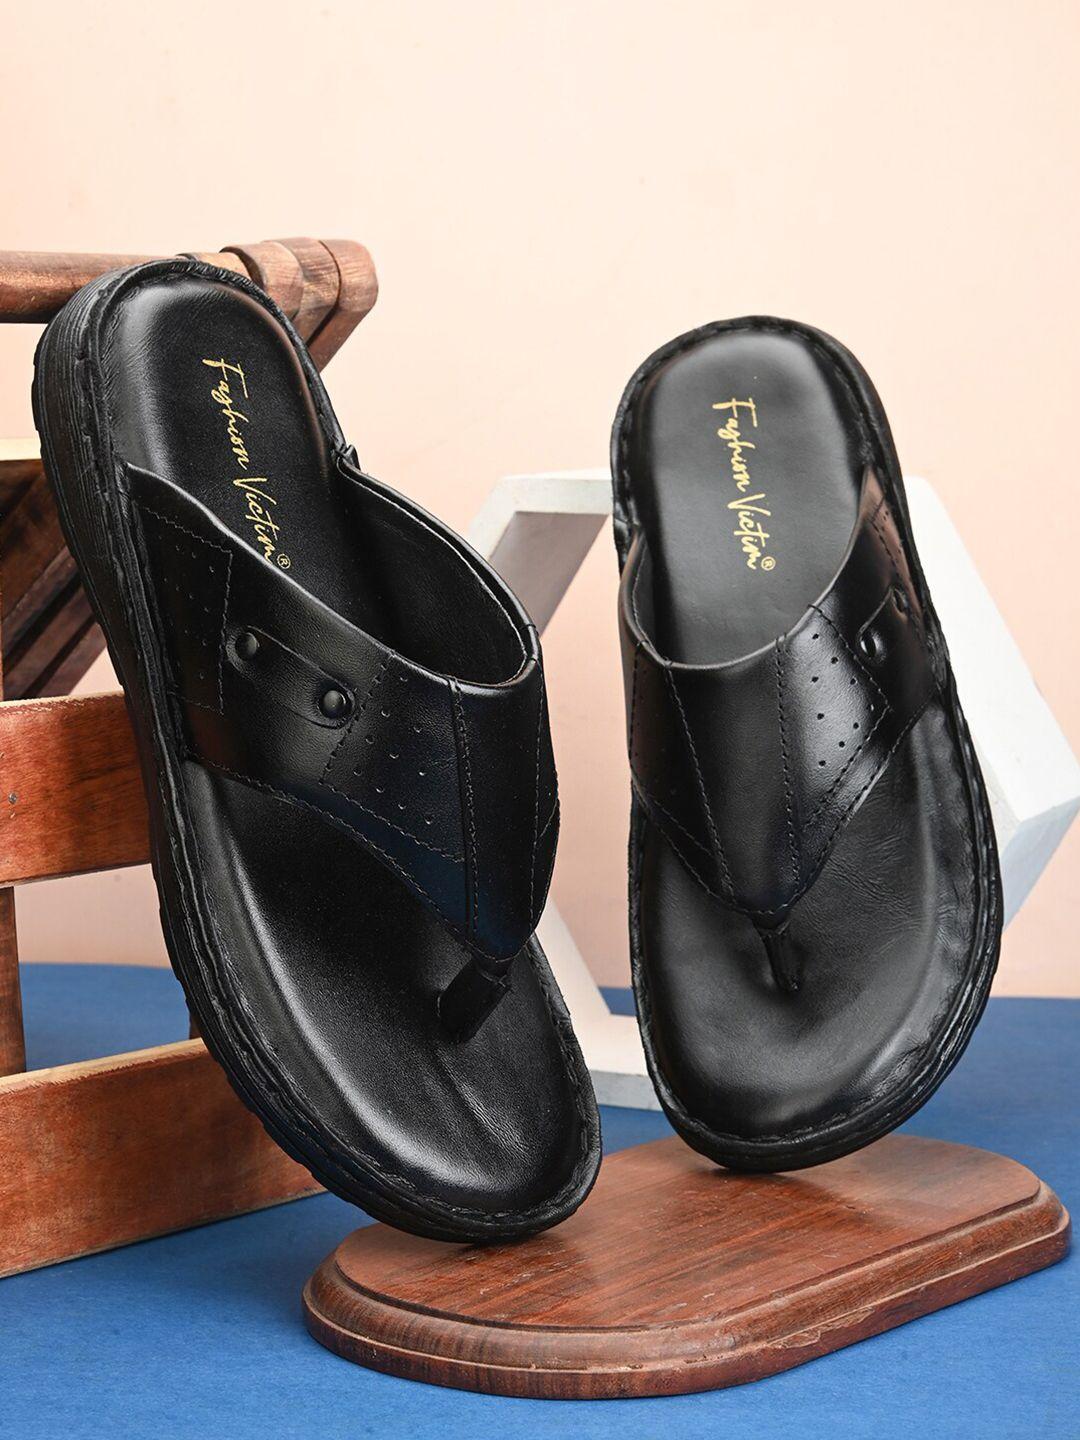 fashion victim men leather open toe comfort sandals